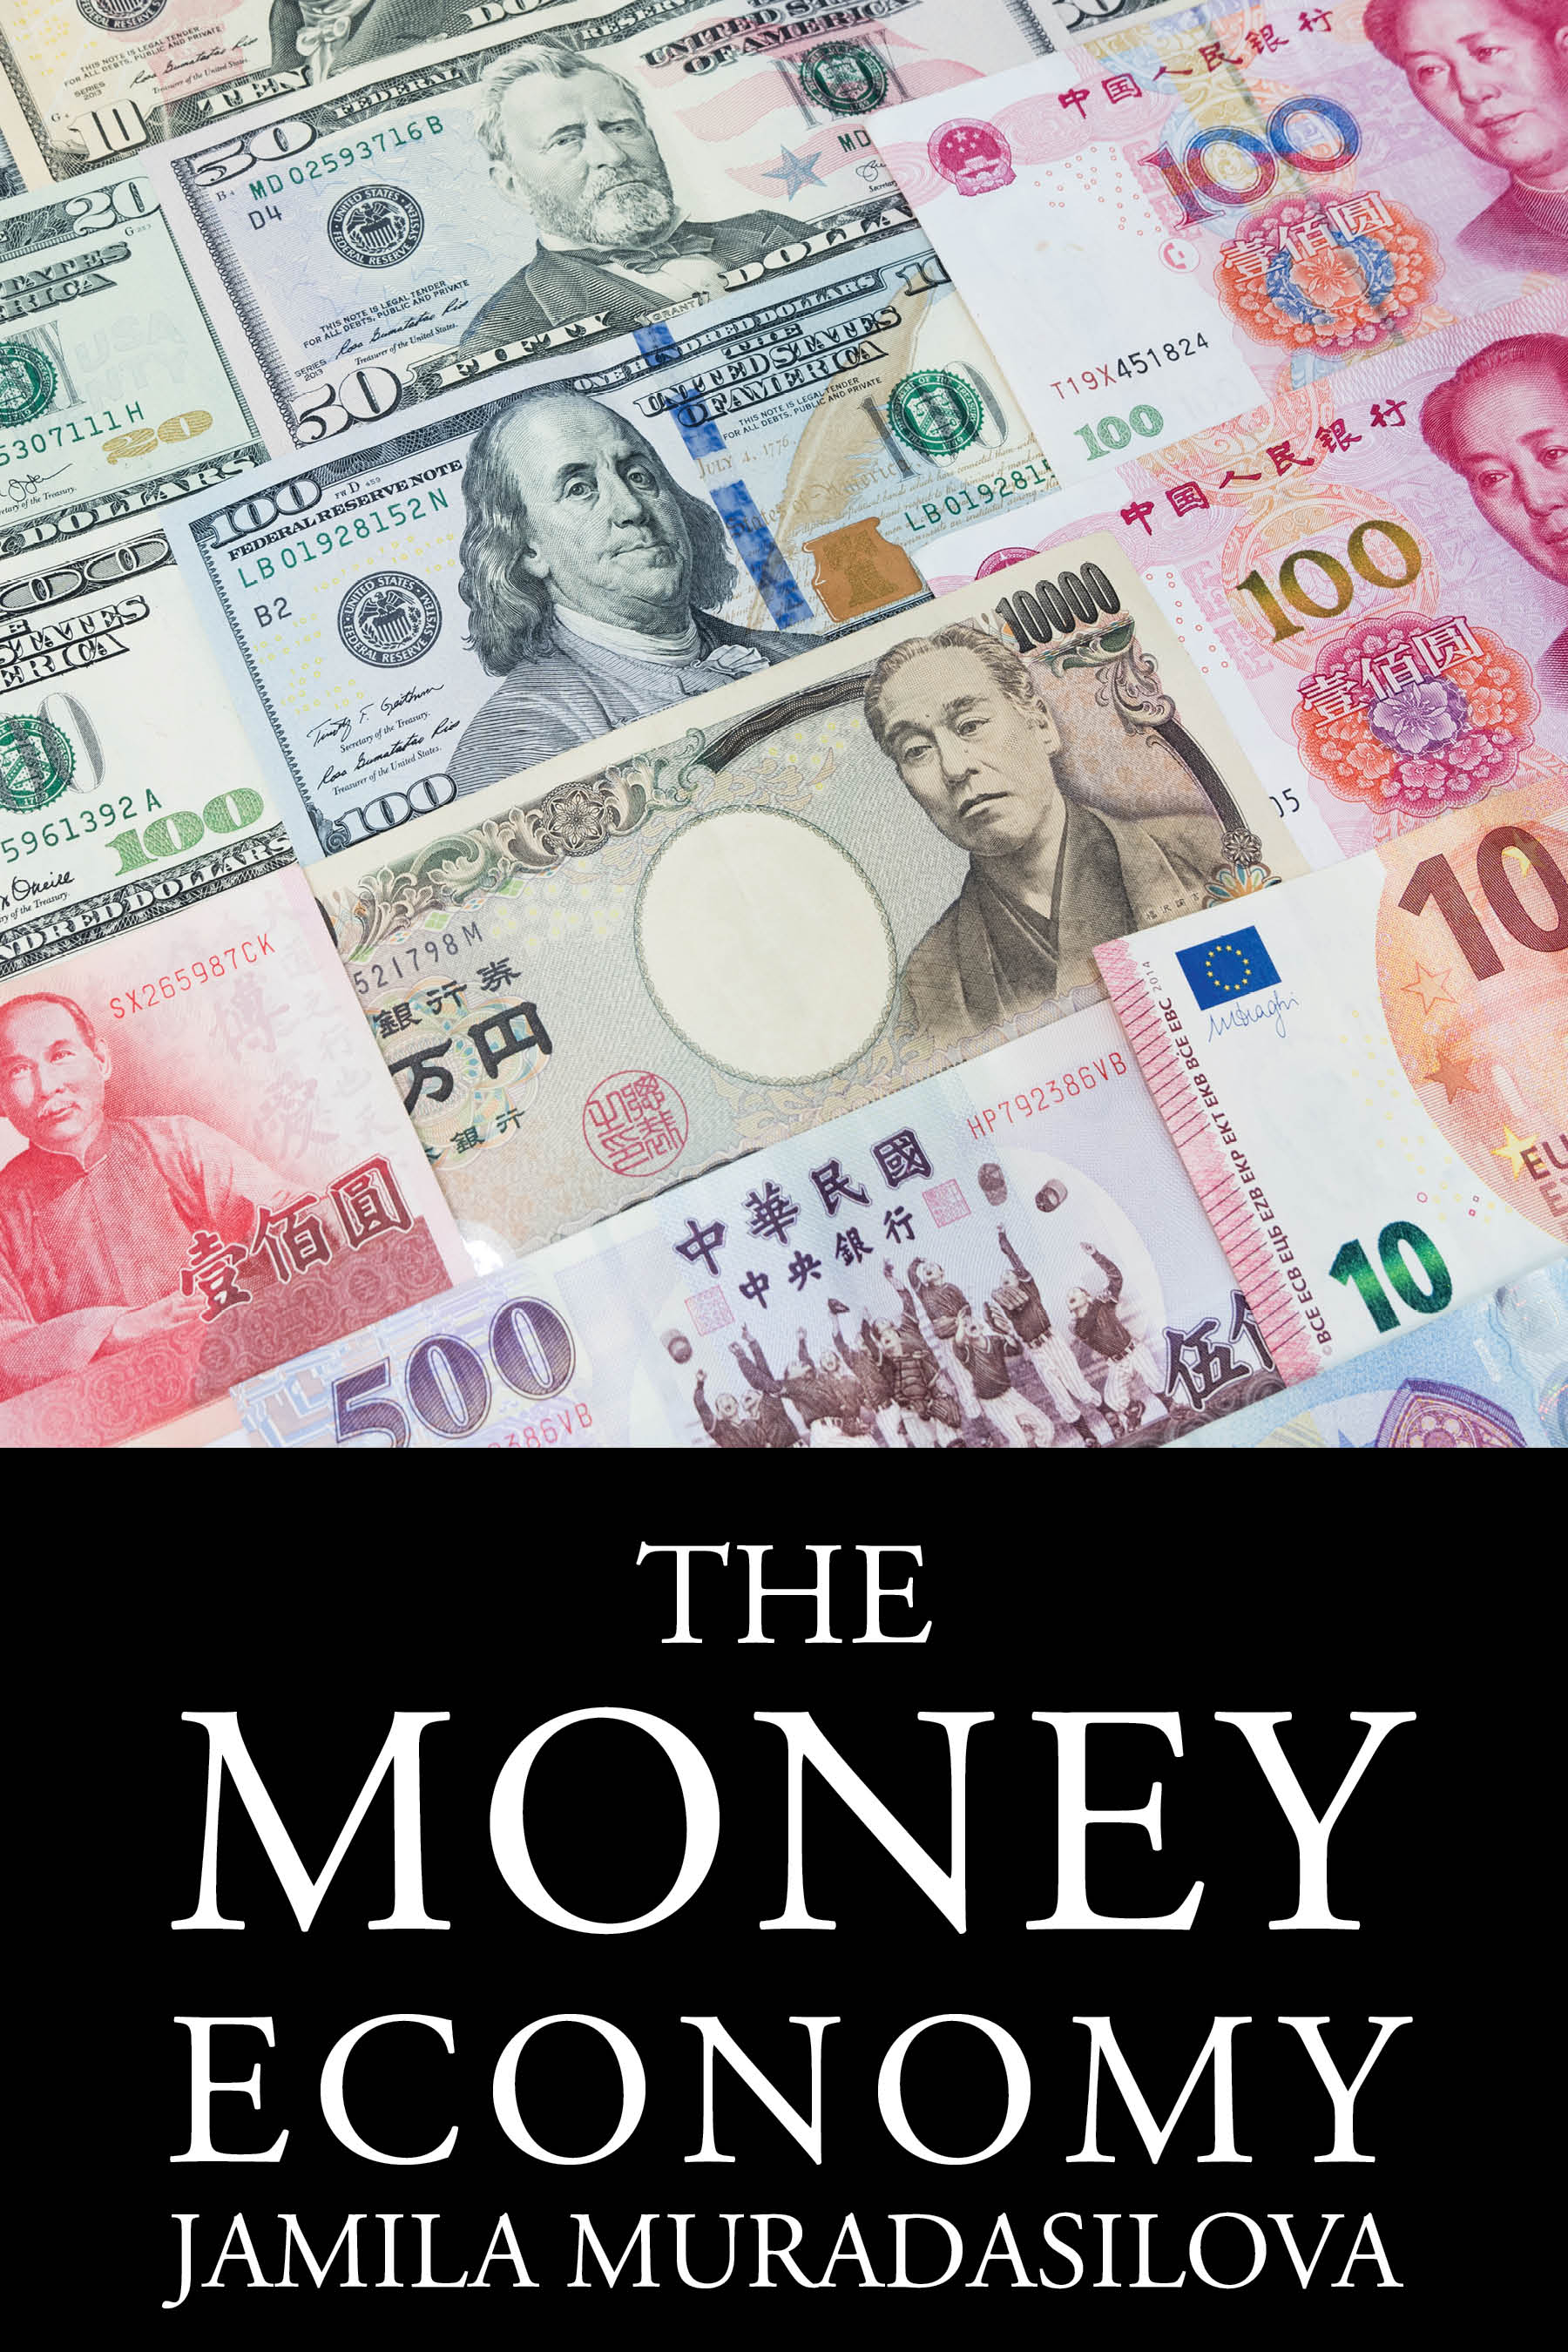 The Money Economy by Jamila Muradasilova